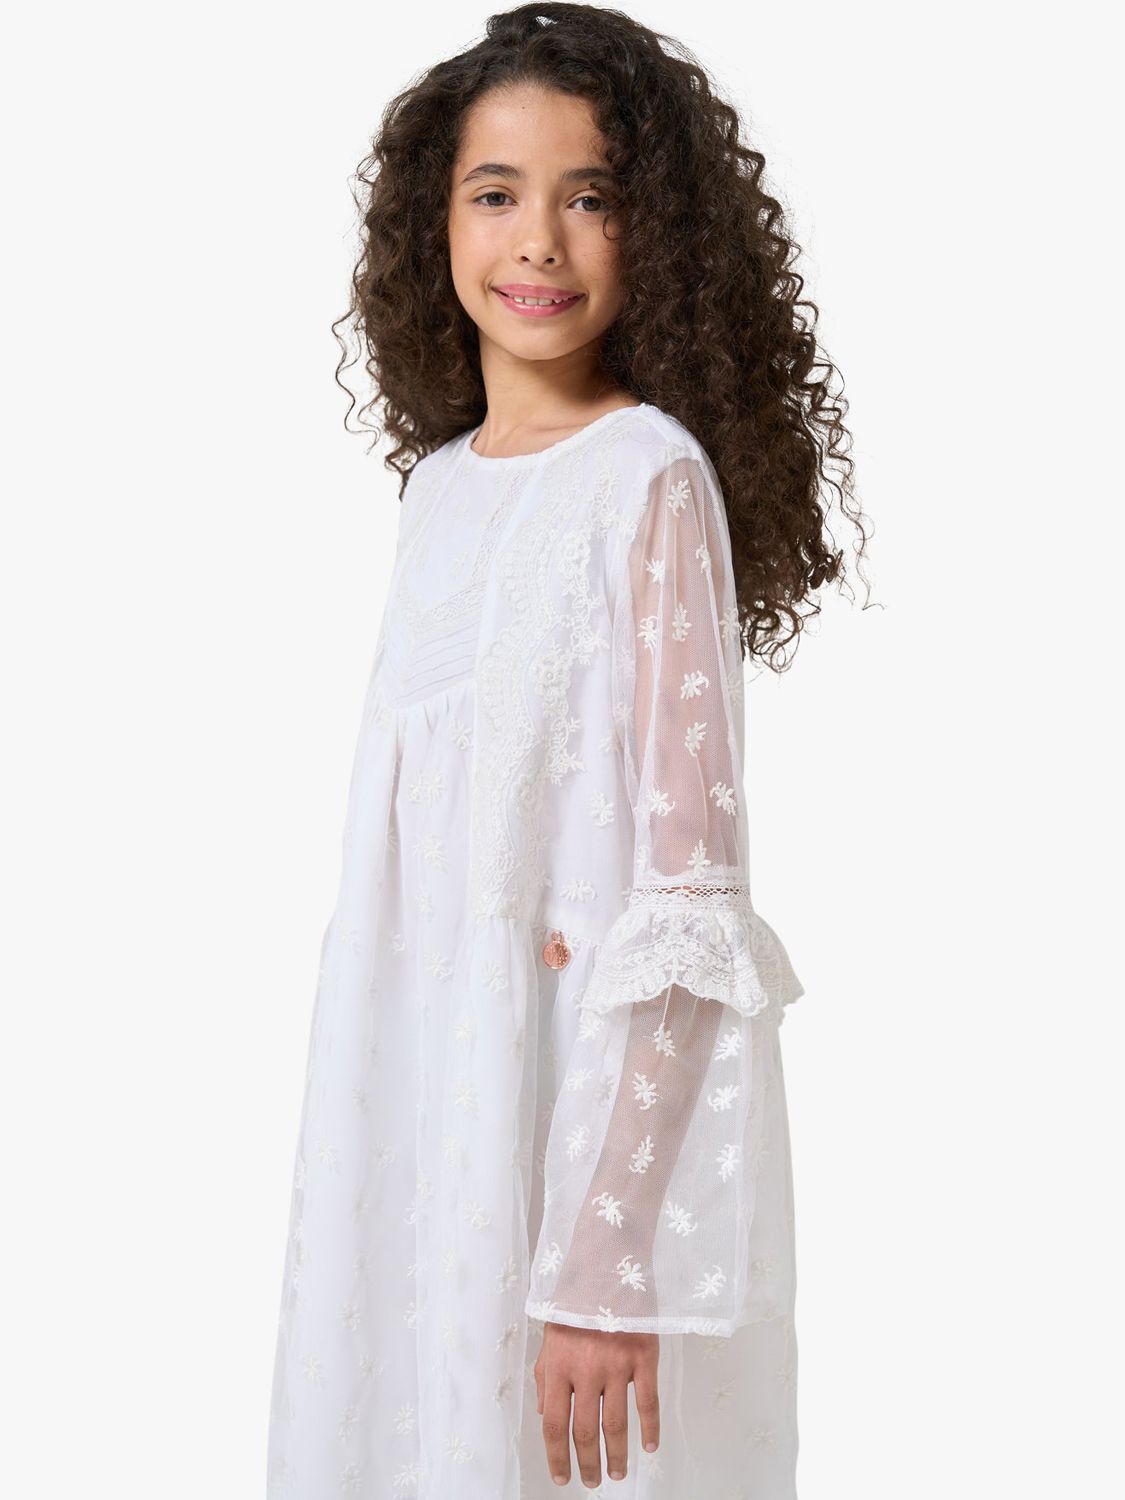 Angel & Rocket Kids' Lace Bell Sleeve Boho Dress, White, 10 years